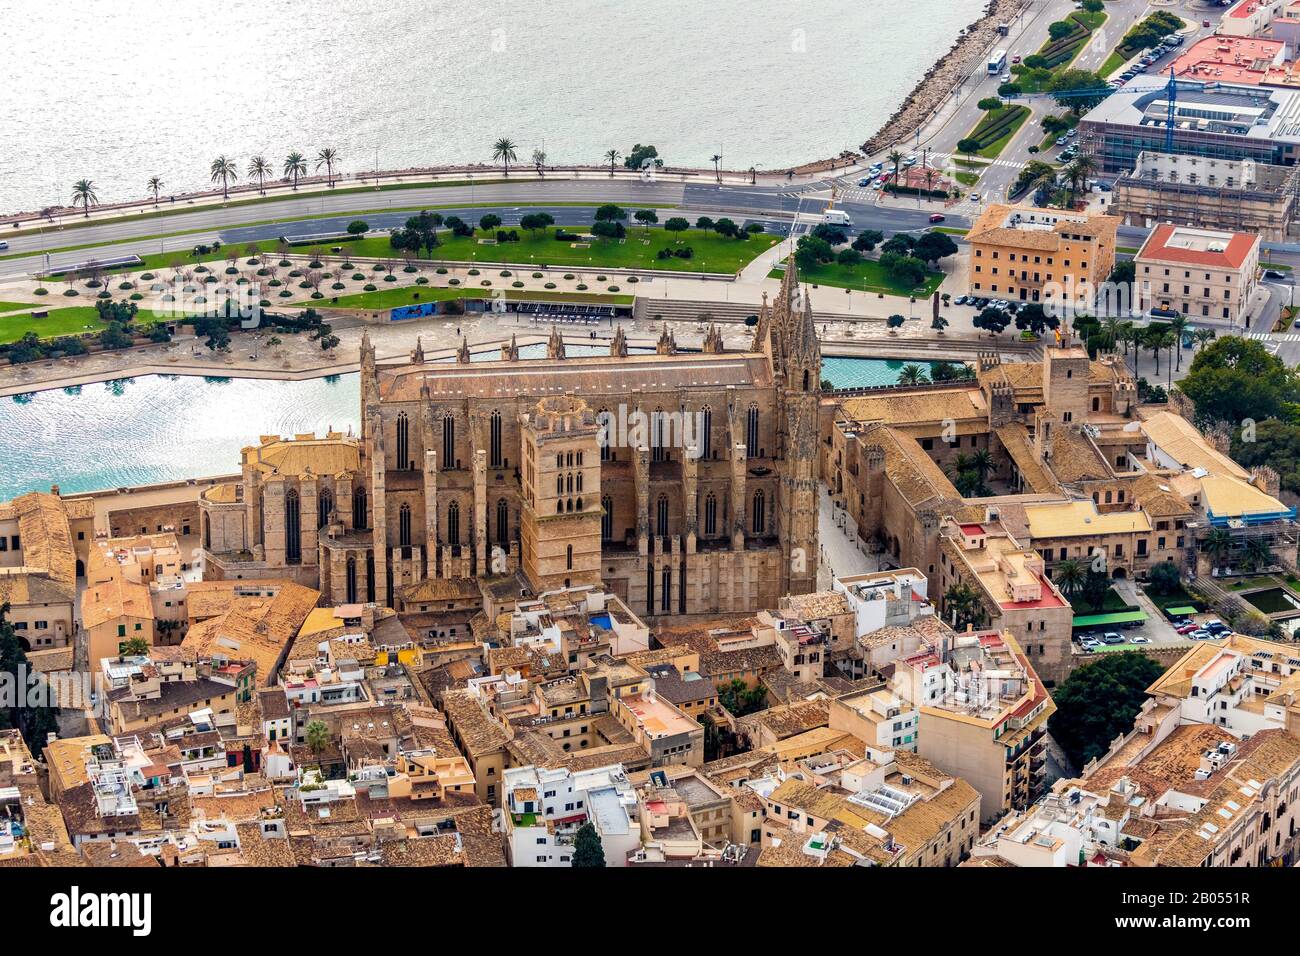 Aerial view, local view, Santa Iglesia Catedral de Mallorca, Cathedral of Palma, Palau Reial de L'Almudaina, Royal Palace, Canamunt, Palma, Mallorca, Stock Photo